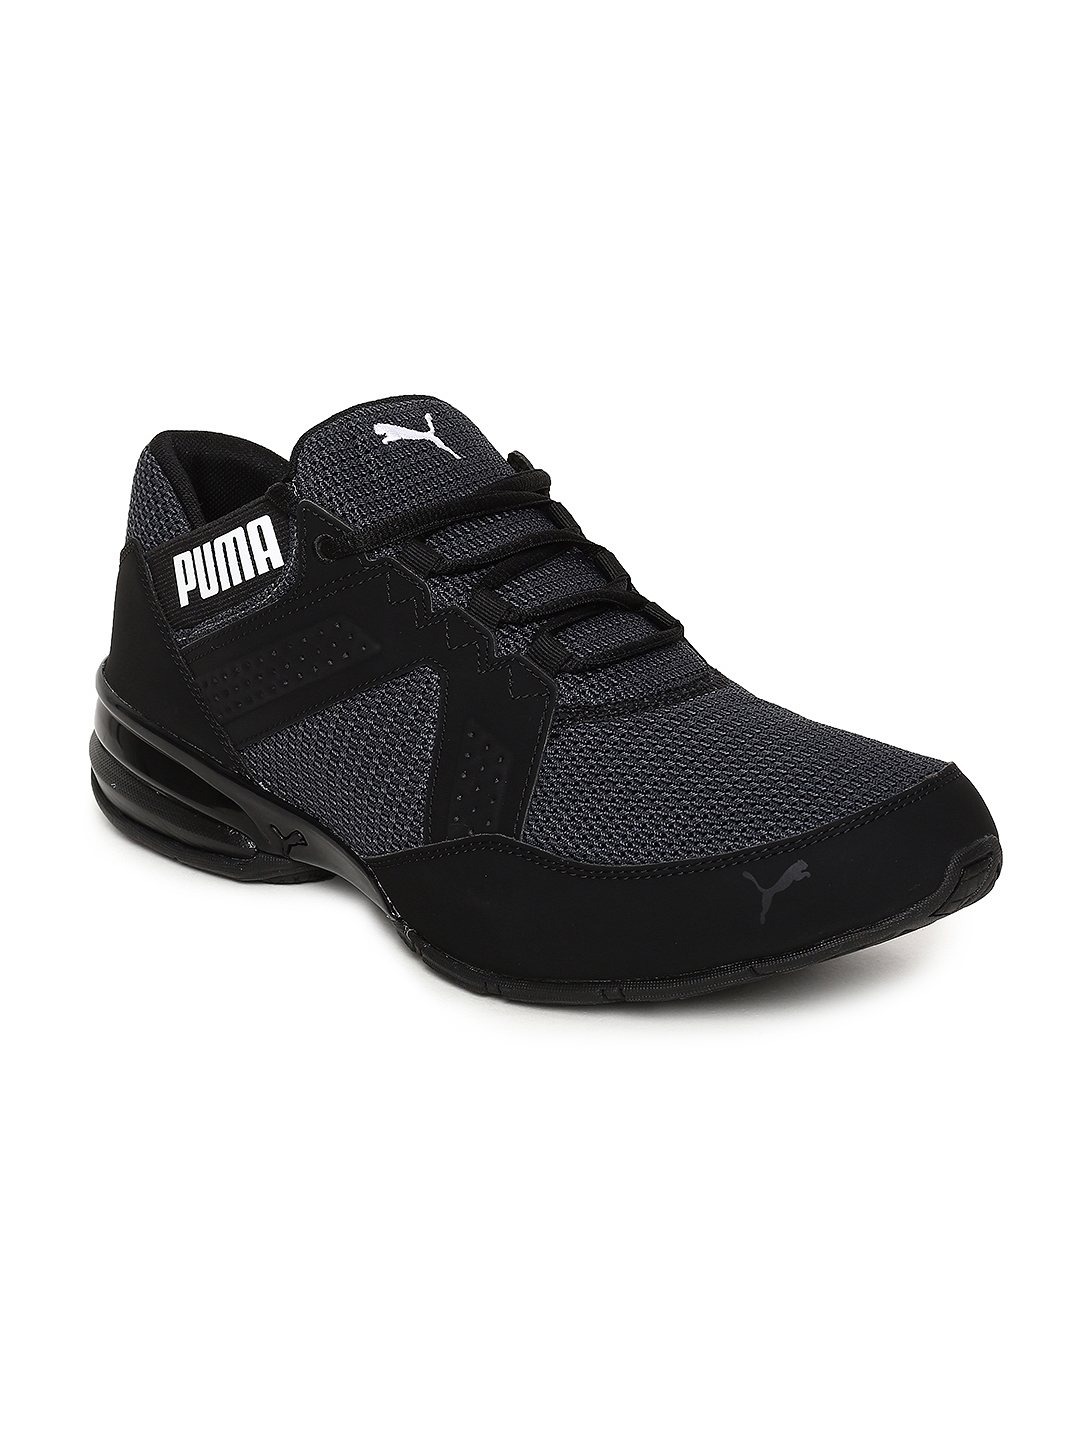 Buy Puma Men Black Mesh Running Shoes - Sports for Men | Myntra